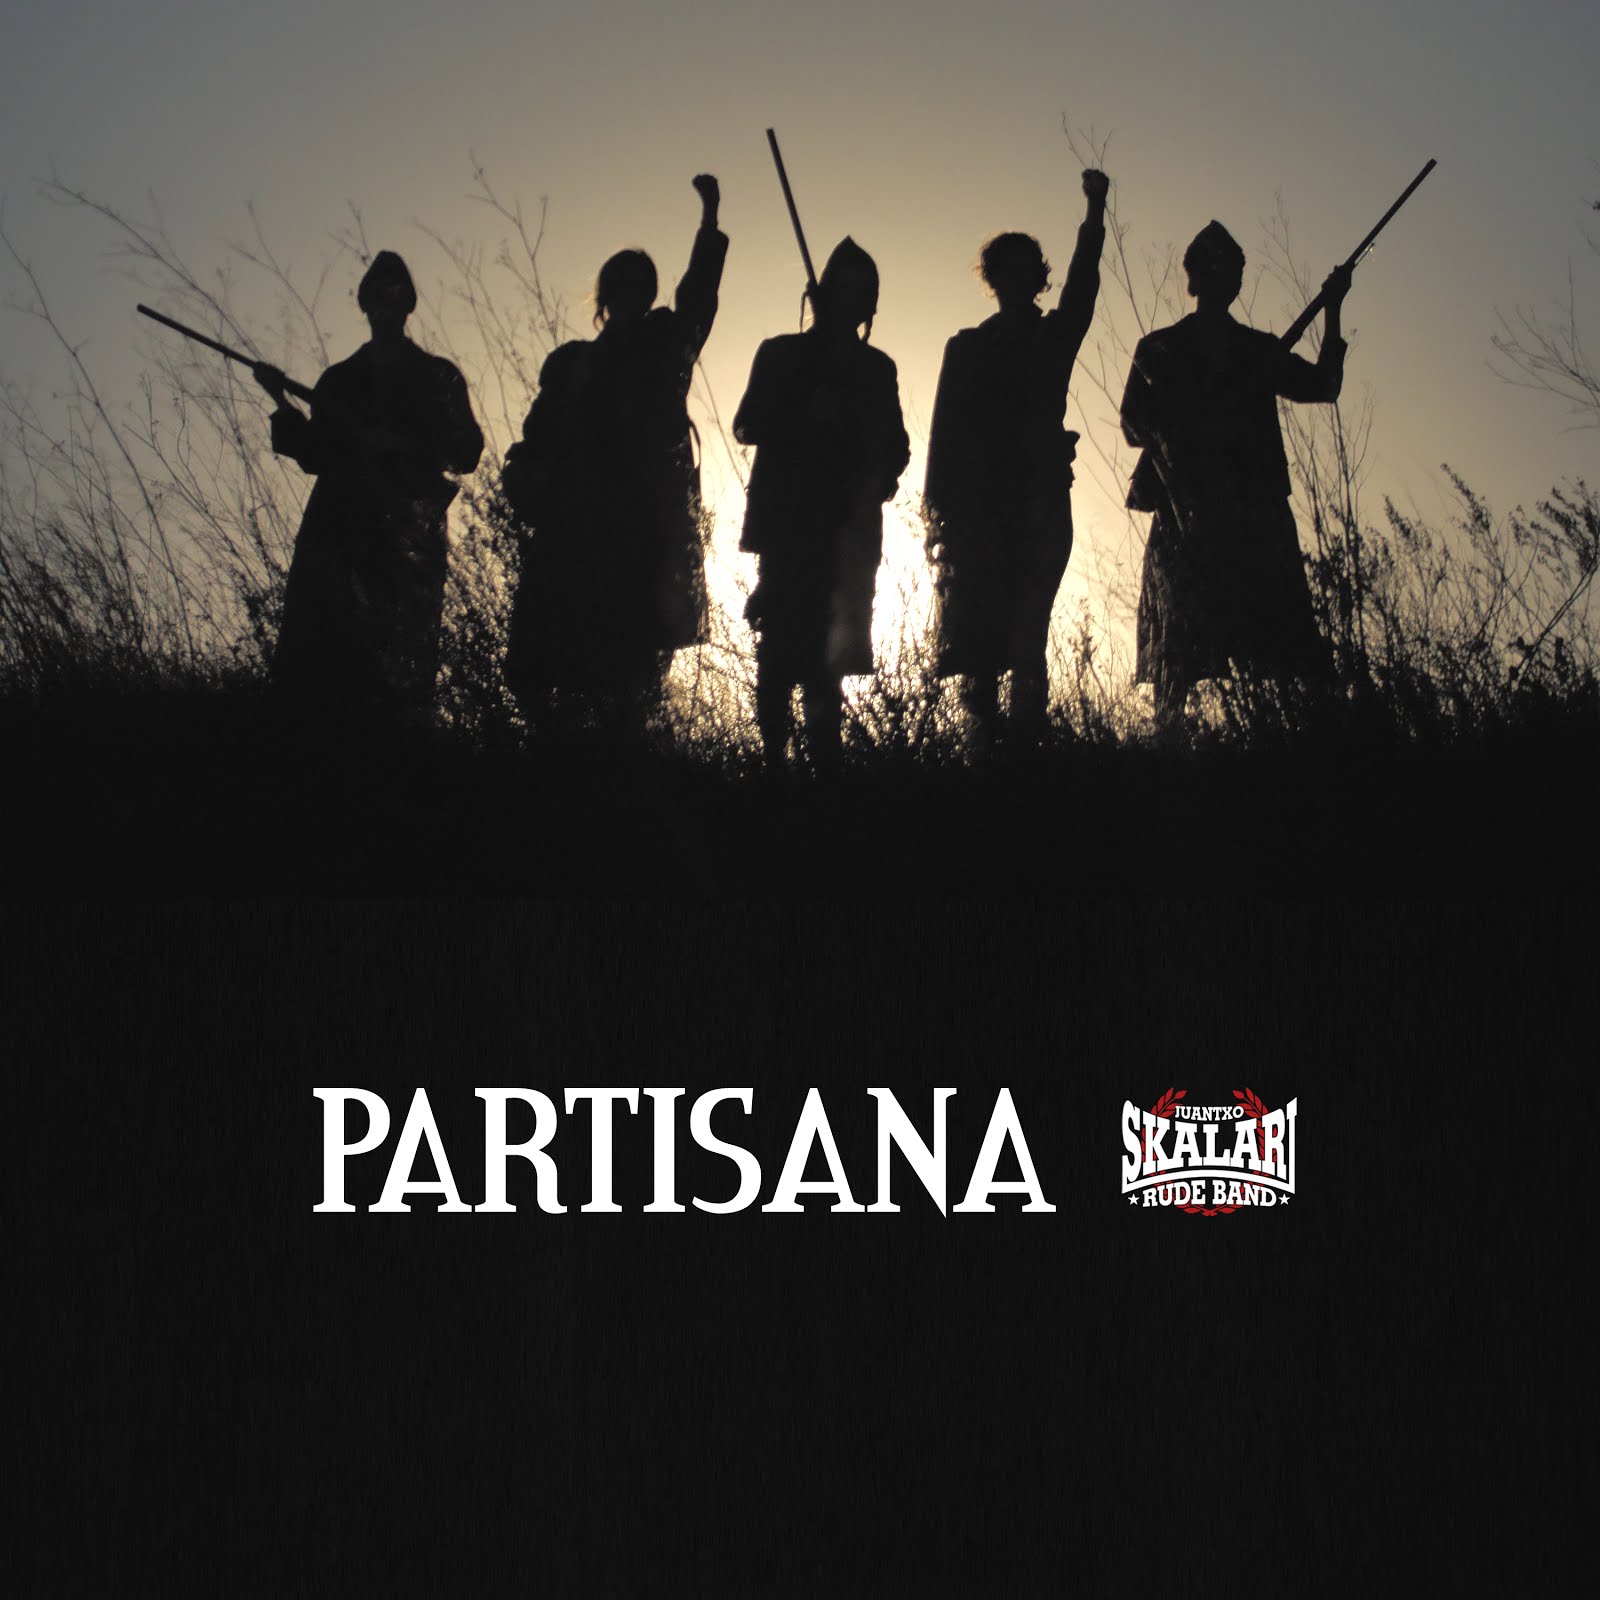 VIDEOCLIP single "PARTISANA"